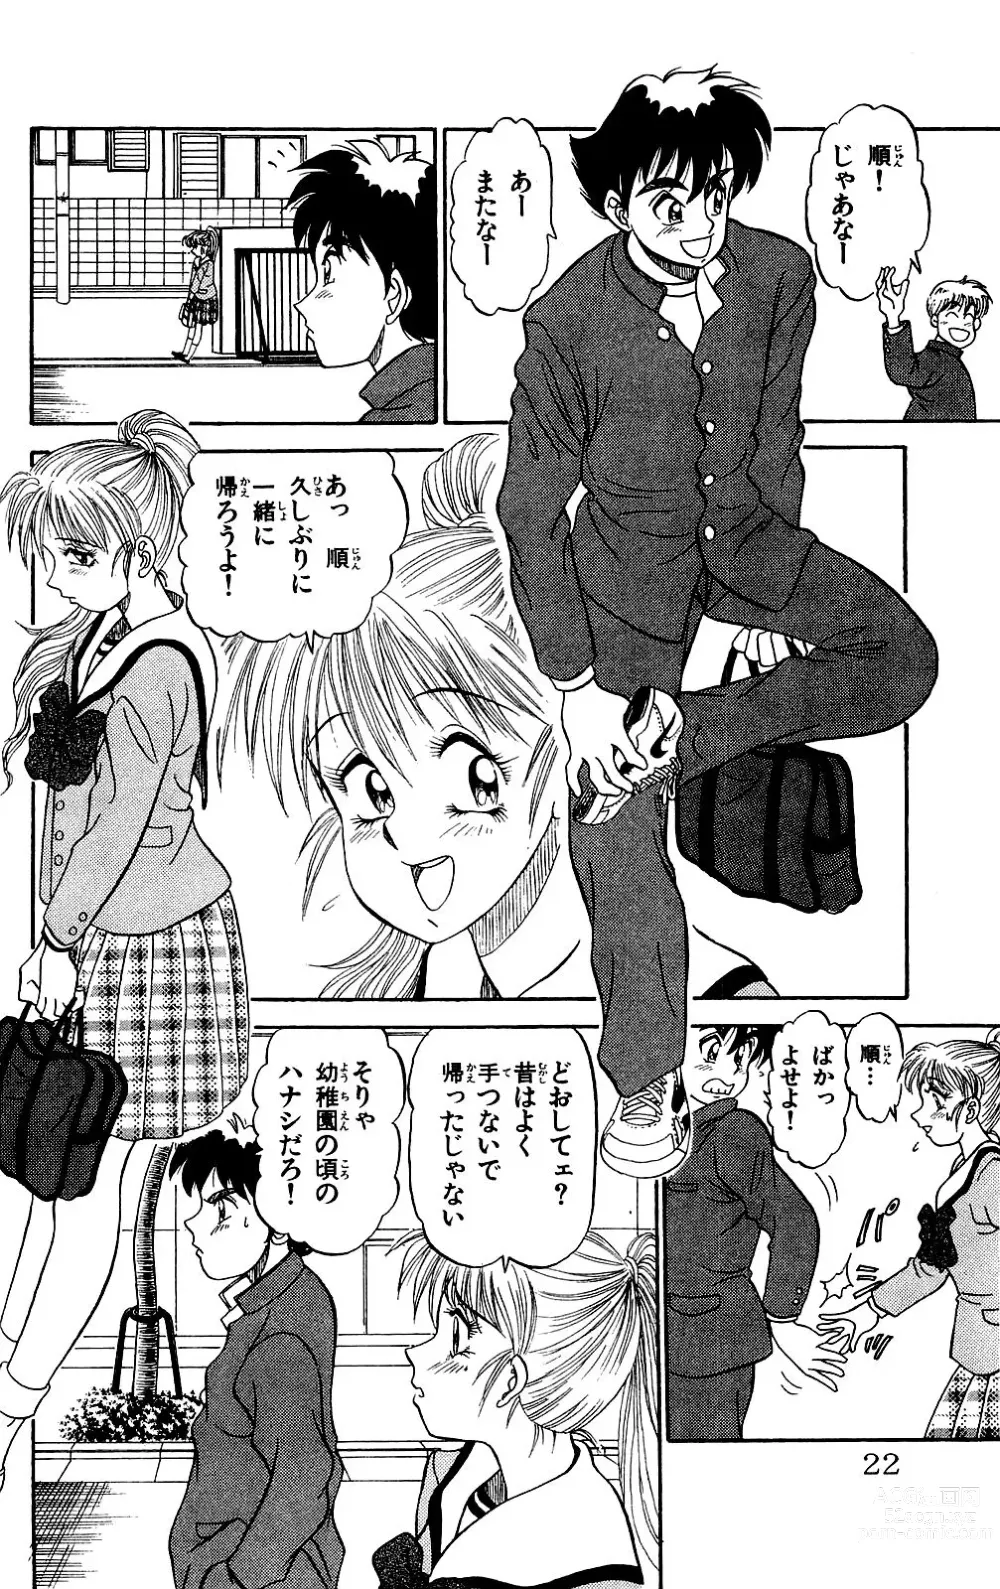 Page 20 of manga Orette Piyoritan Vol. 1